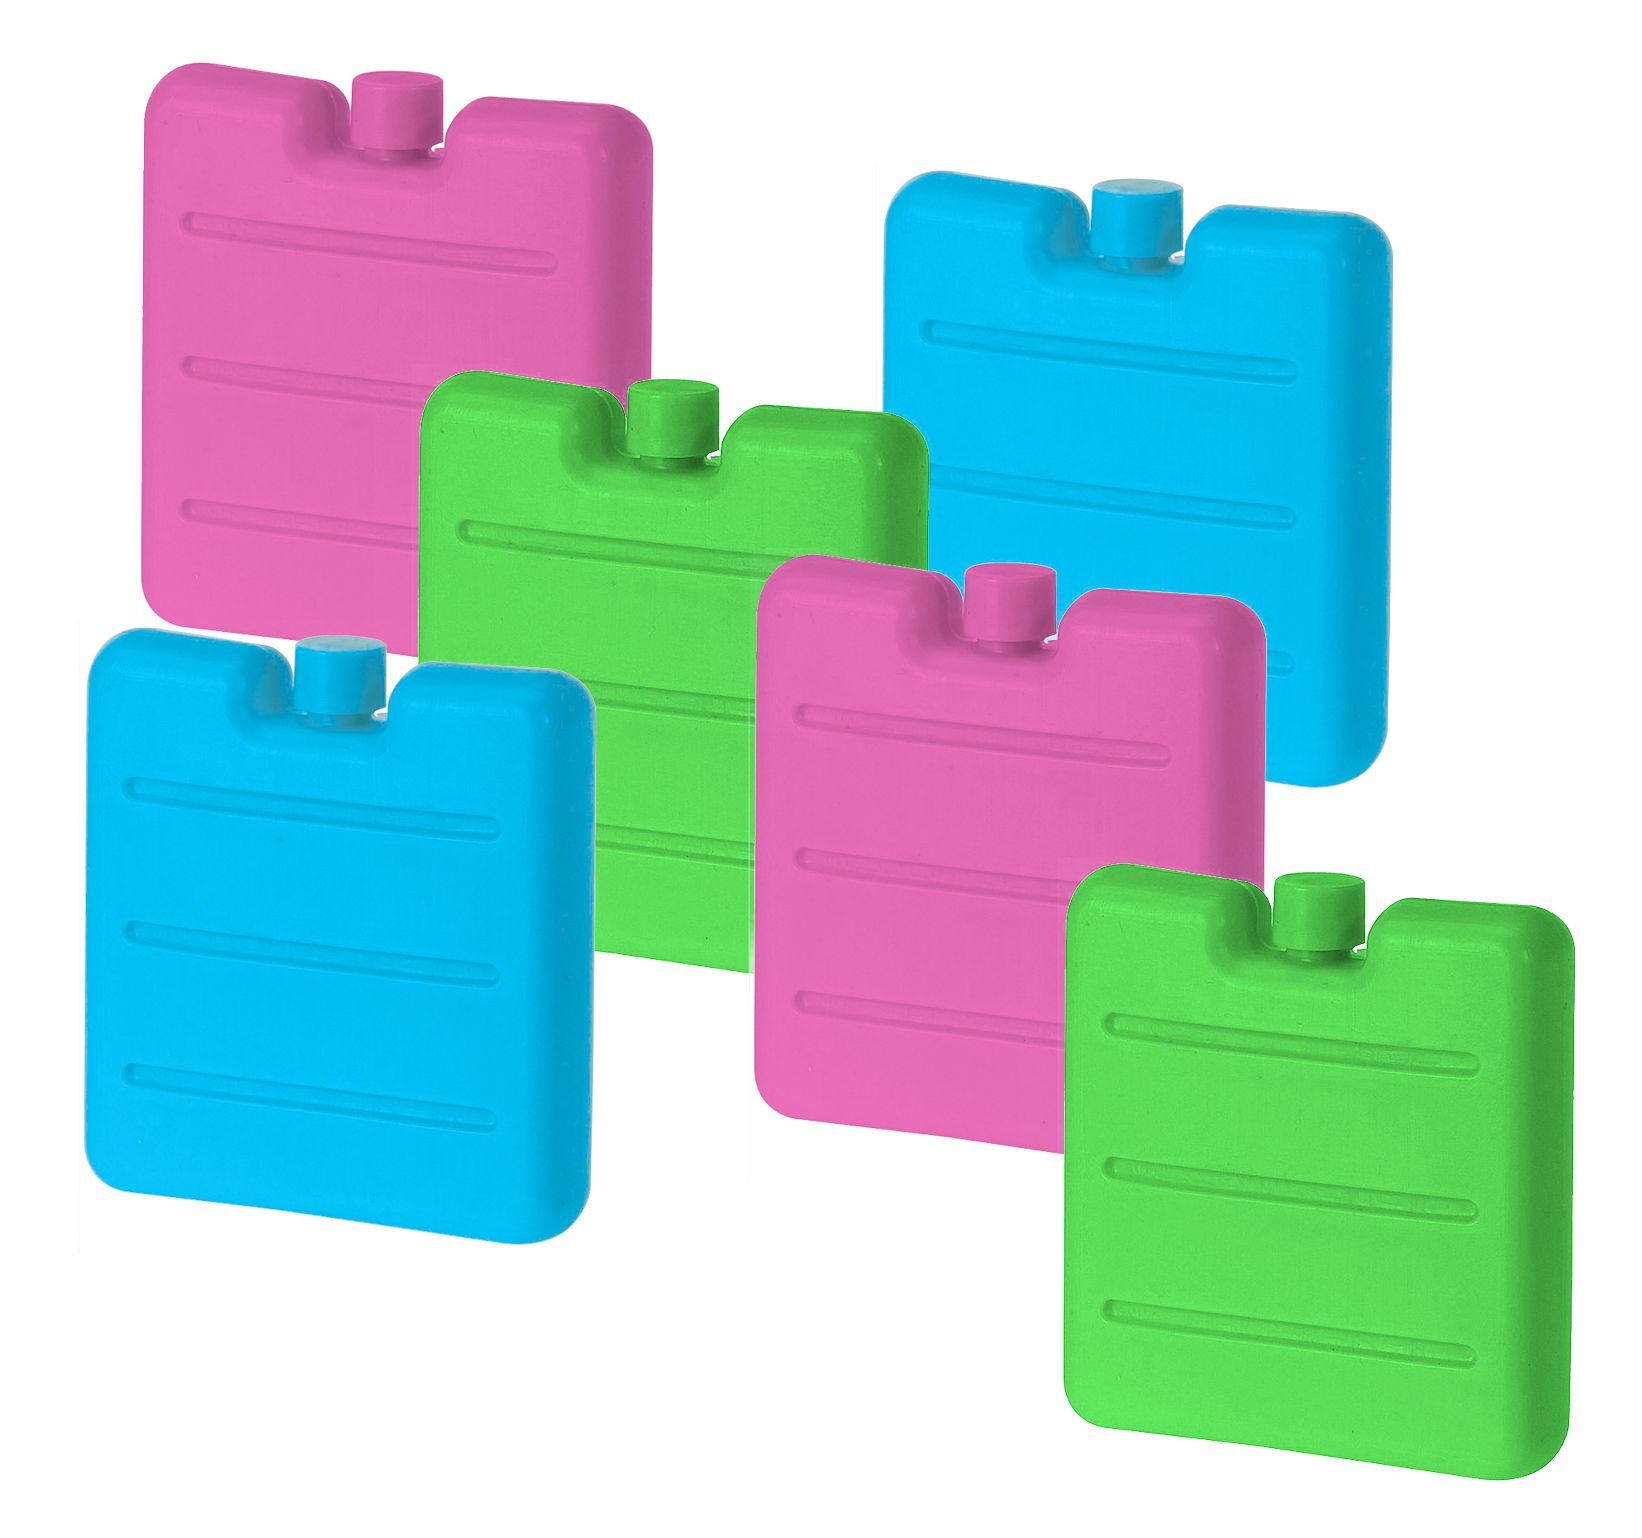 Spetebo Kühlakku Mini Kühlakkus 6er Set in 3 Farben - je 8 x 7 cm, Kleine  Kühl Elemente flach für Brotdose Camping Lunchbox